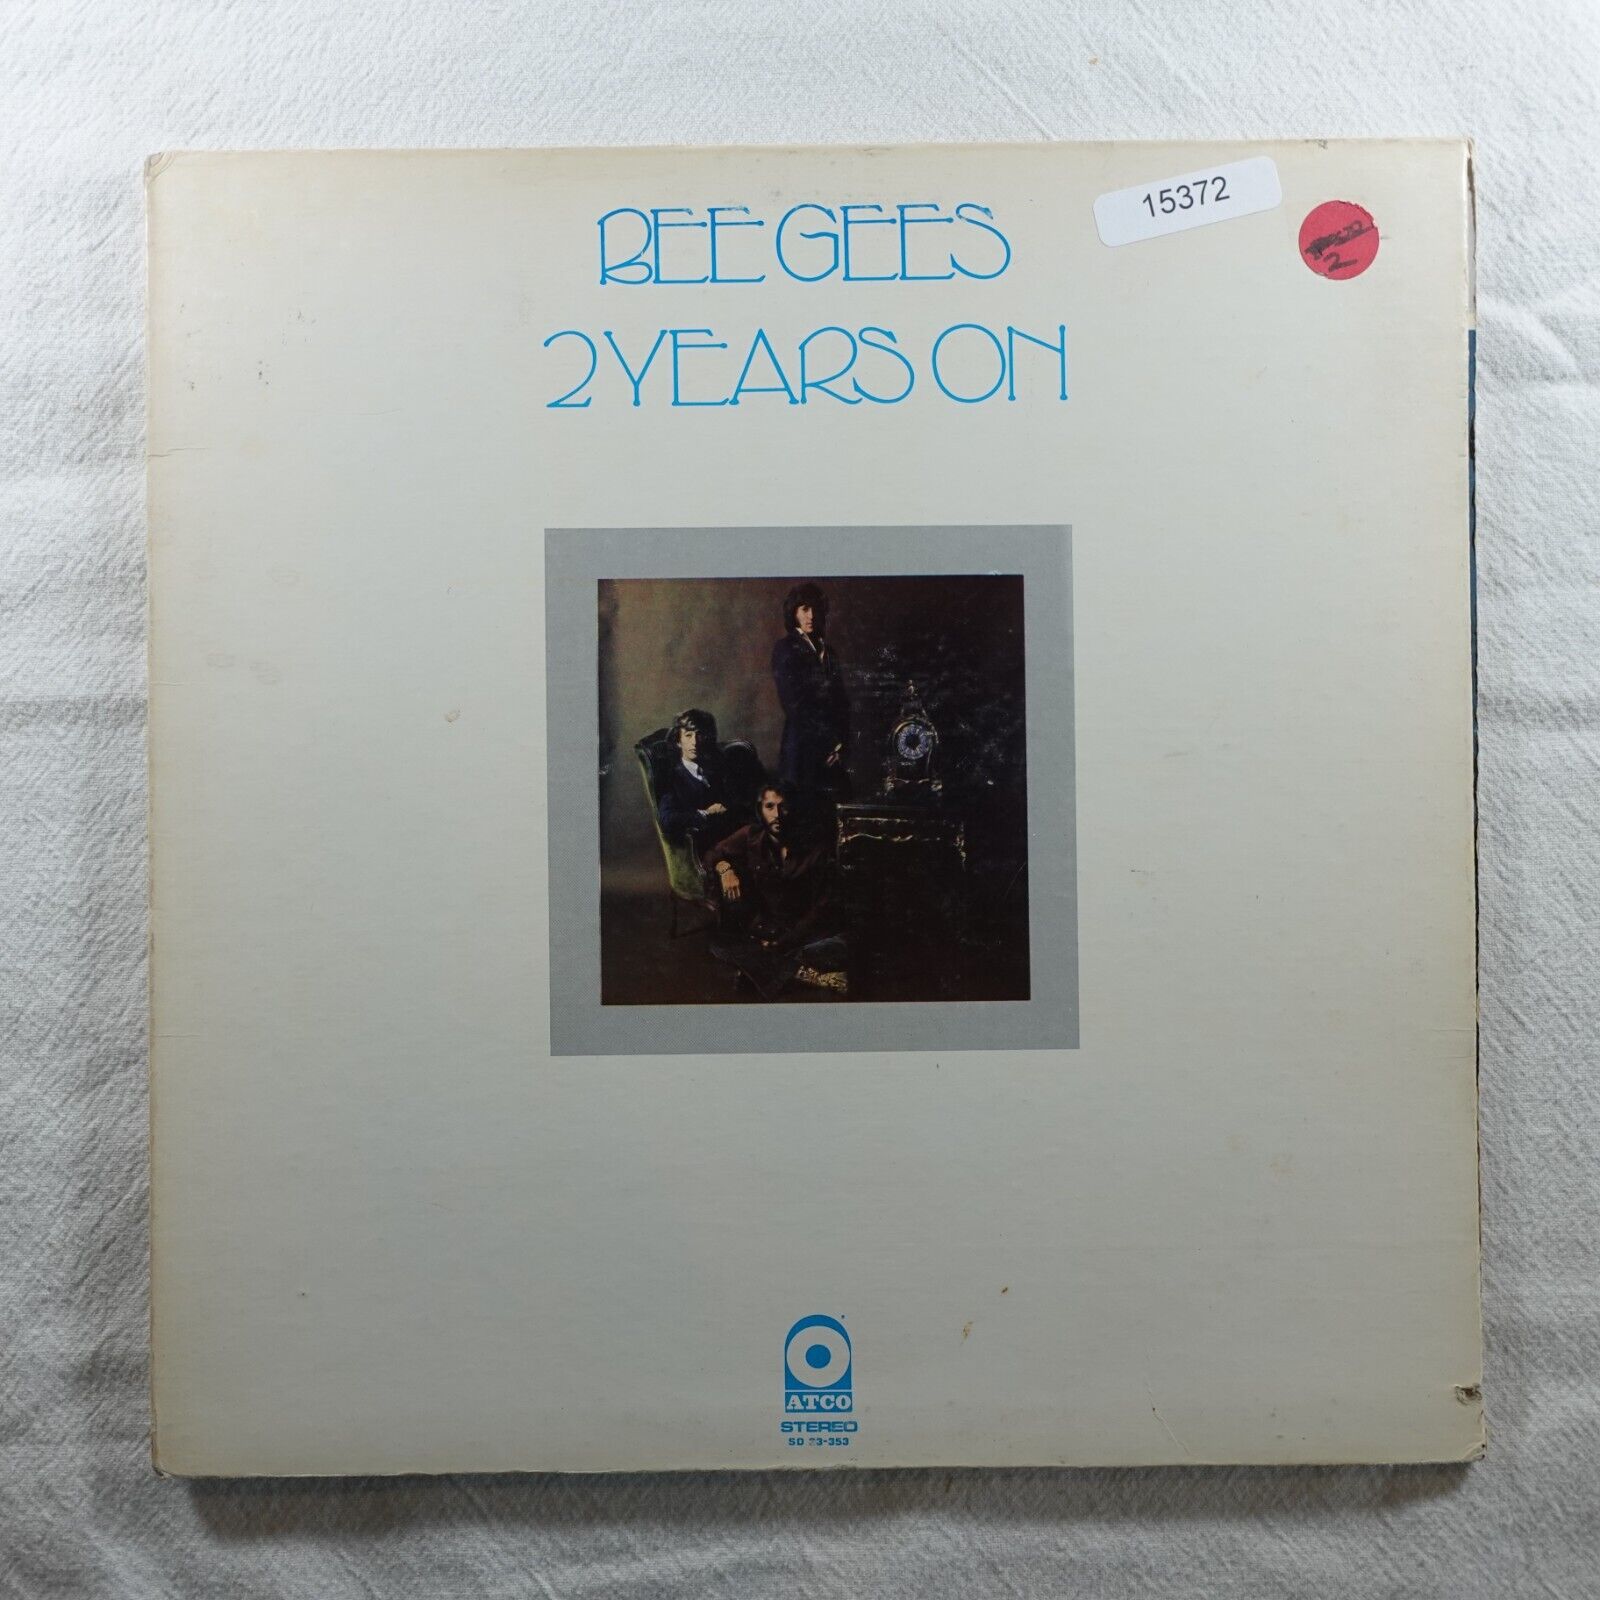 Bee Gees 2 Years On   Record Album Vinyl LP